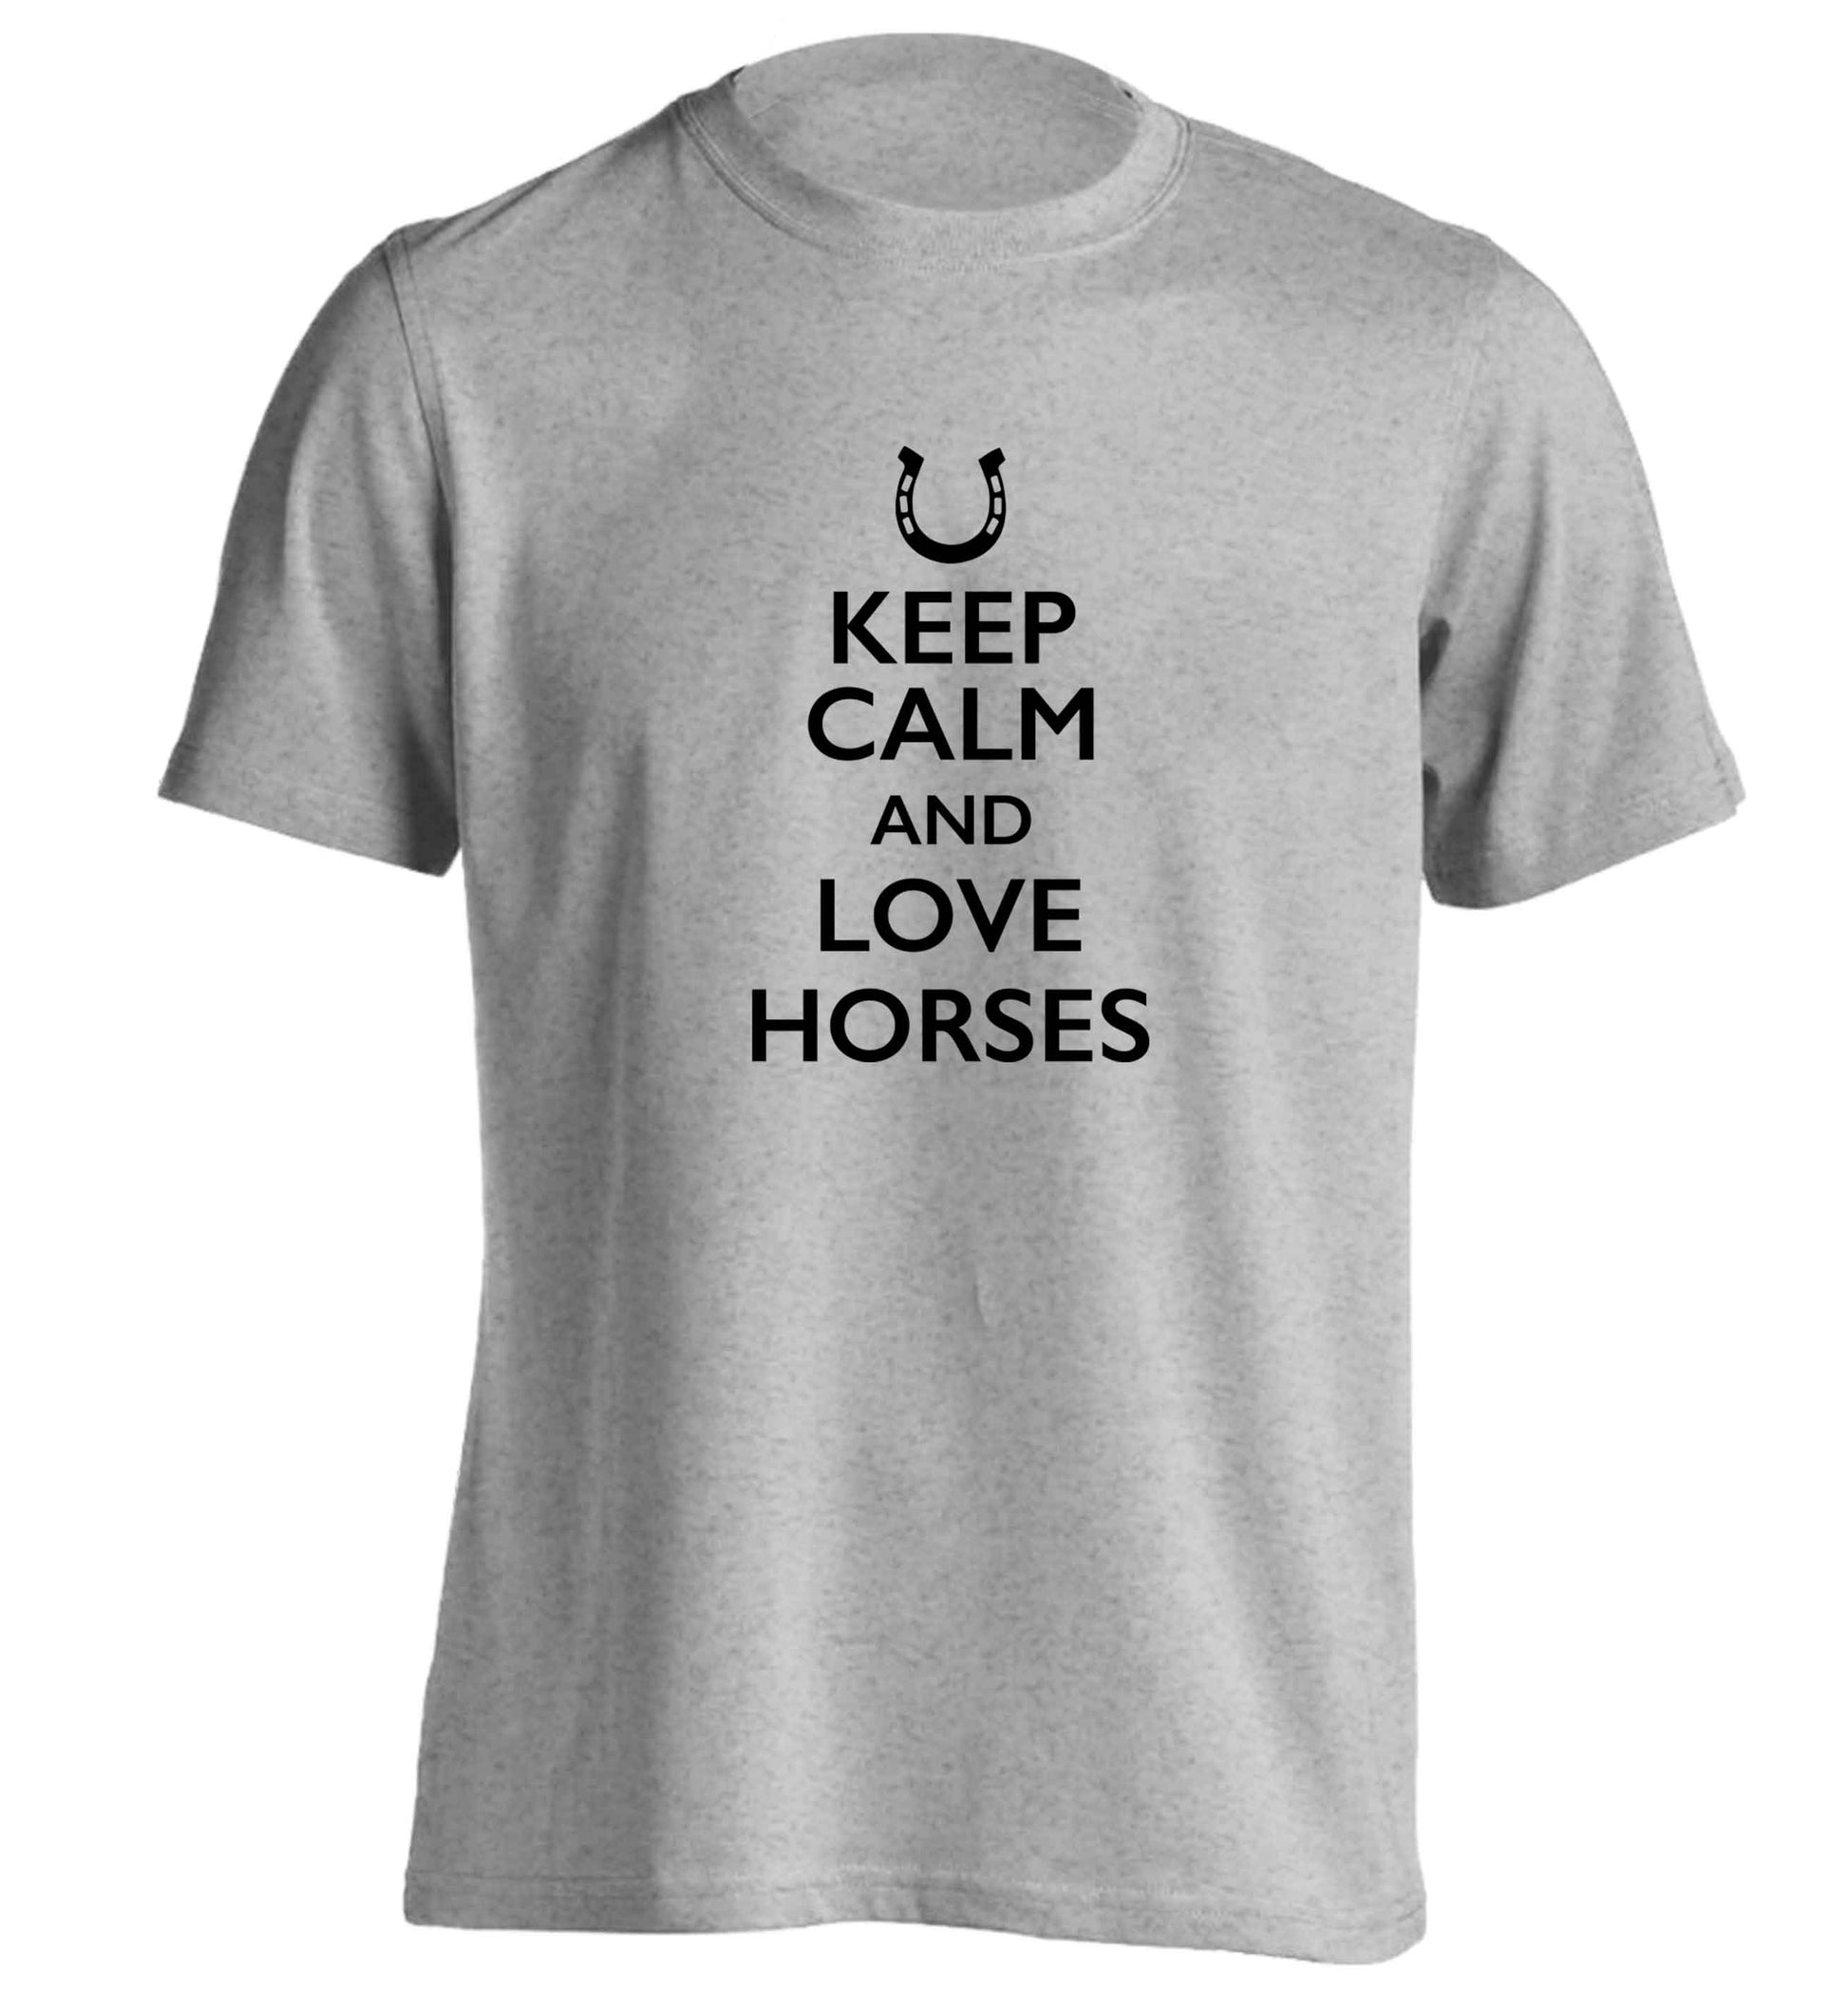 Keep calm and love horses adults unisex grey Tshirt 2XL